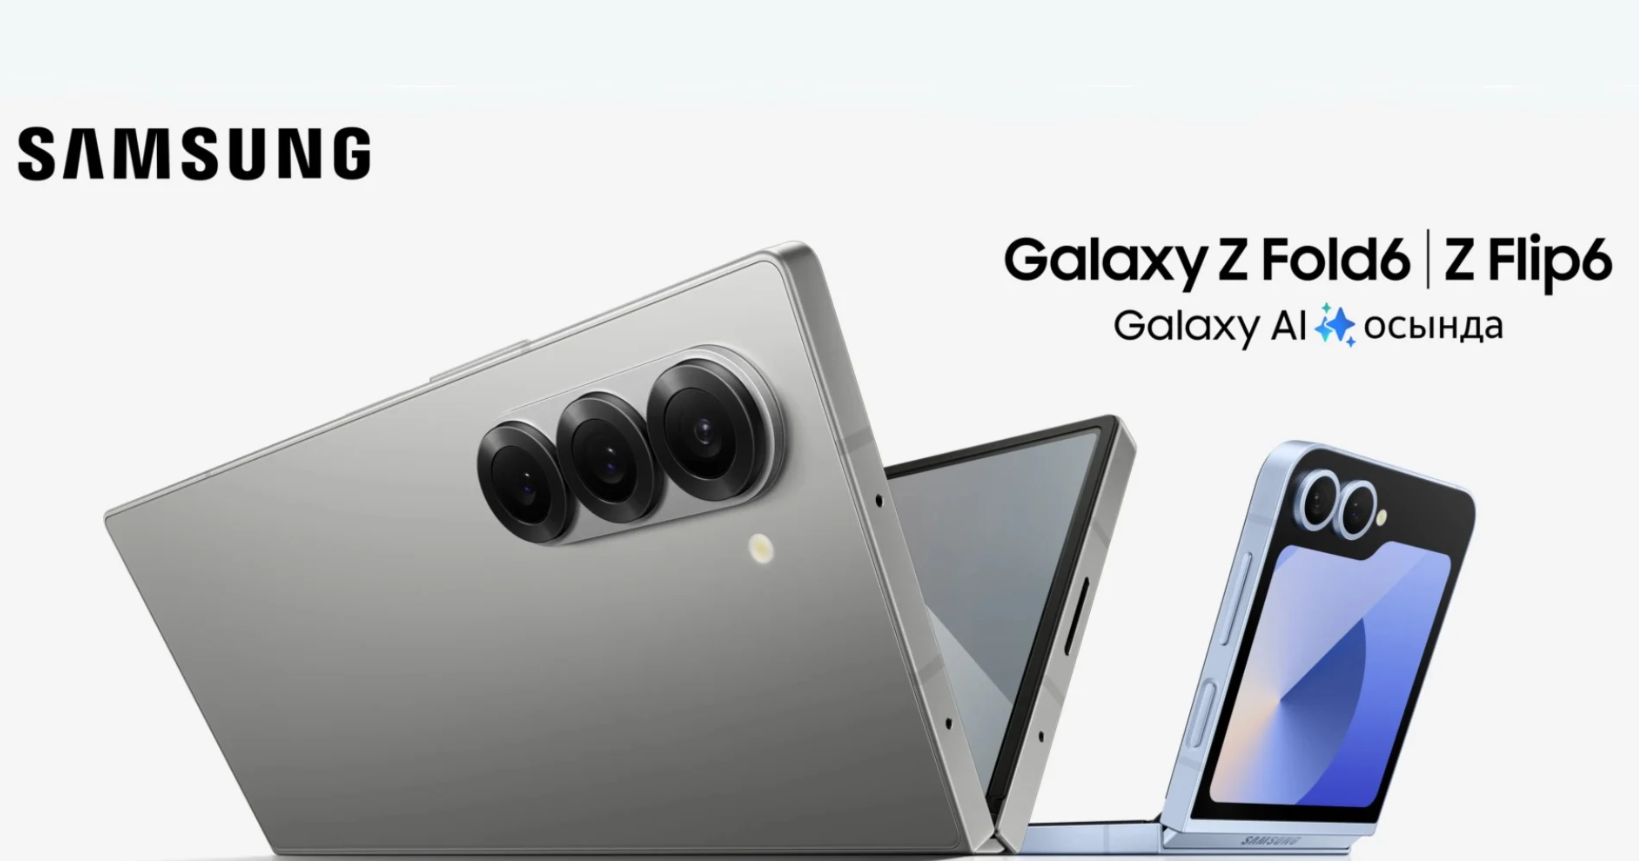 July 10 – Samsung Galaxy Z Fold 6 and Flip 6